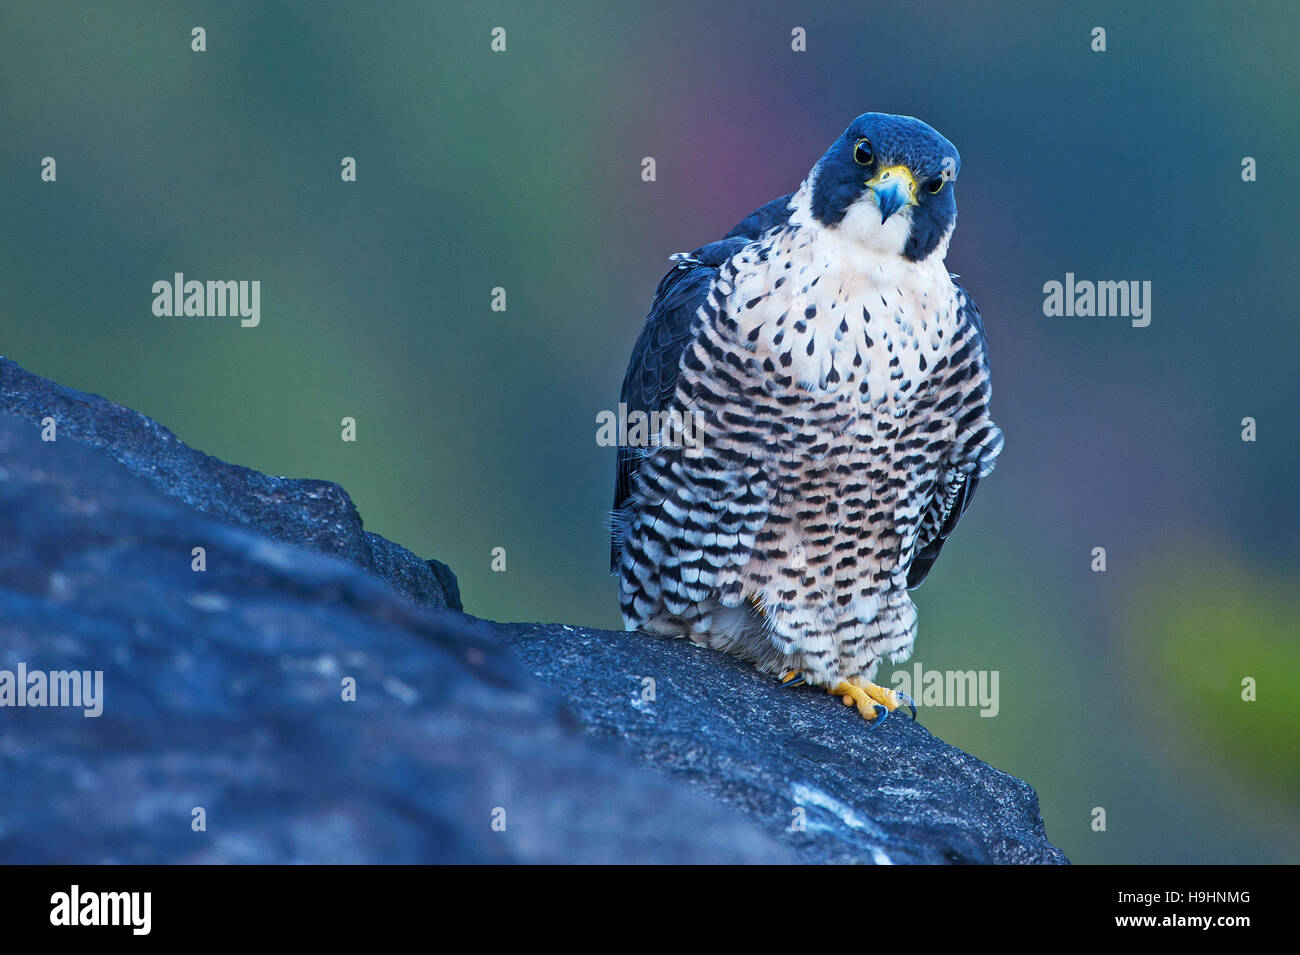 Adult peregrine falcon on rock ledge Stock Photo